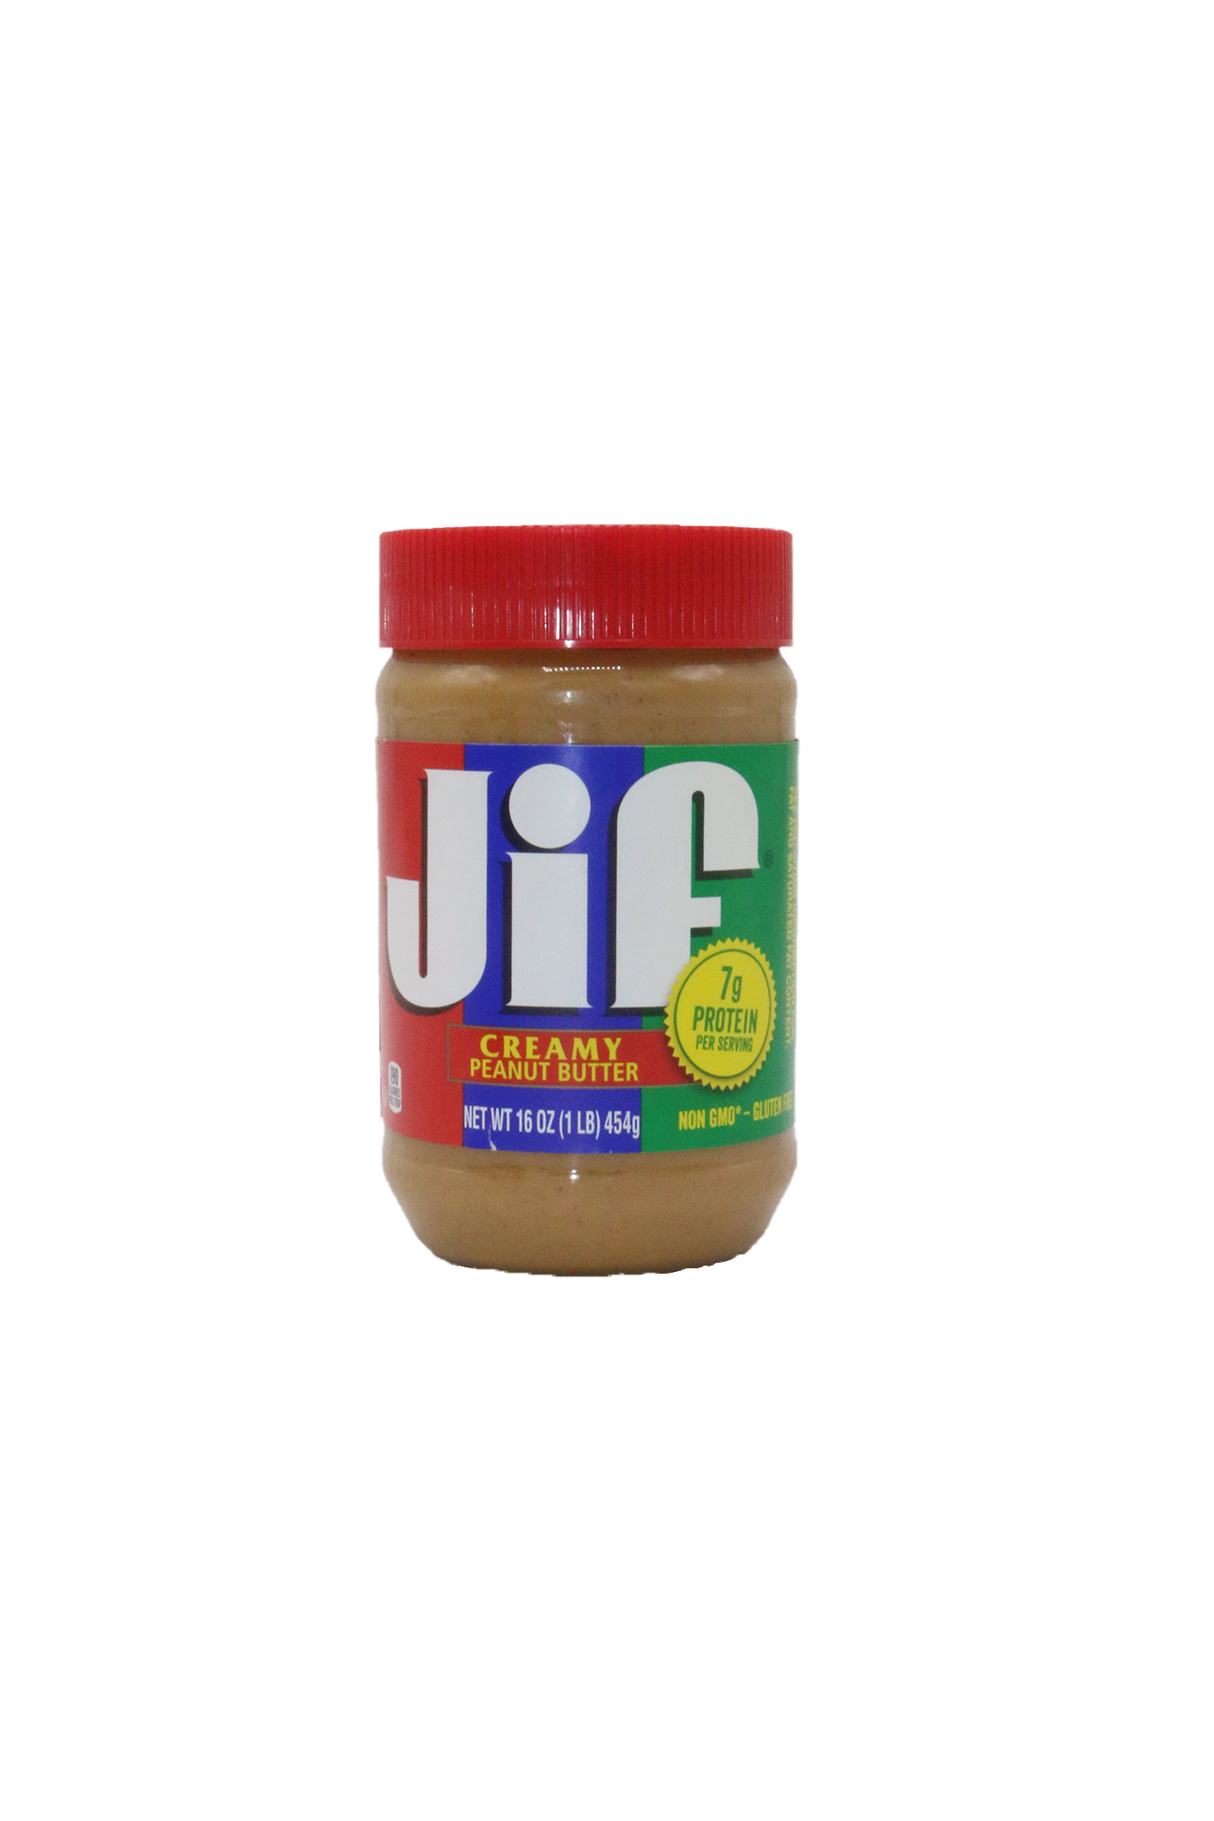 jif peanut butter creamy 454g